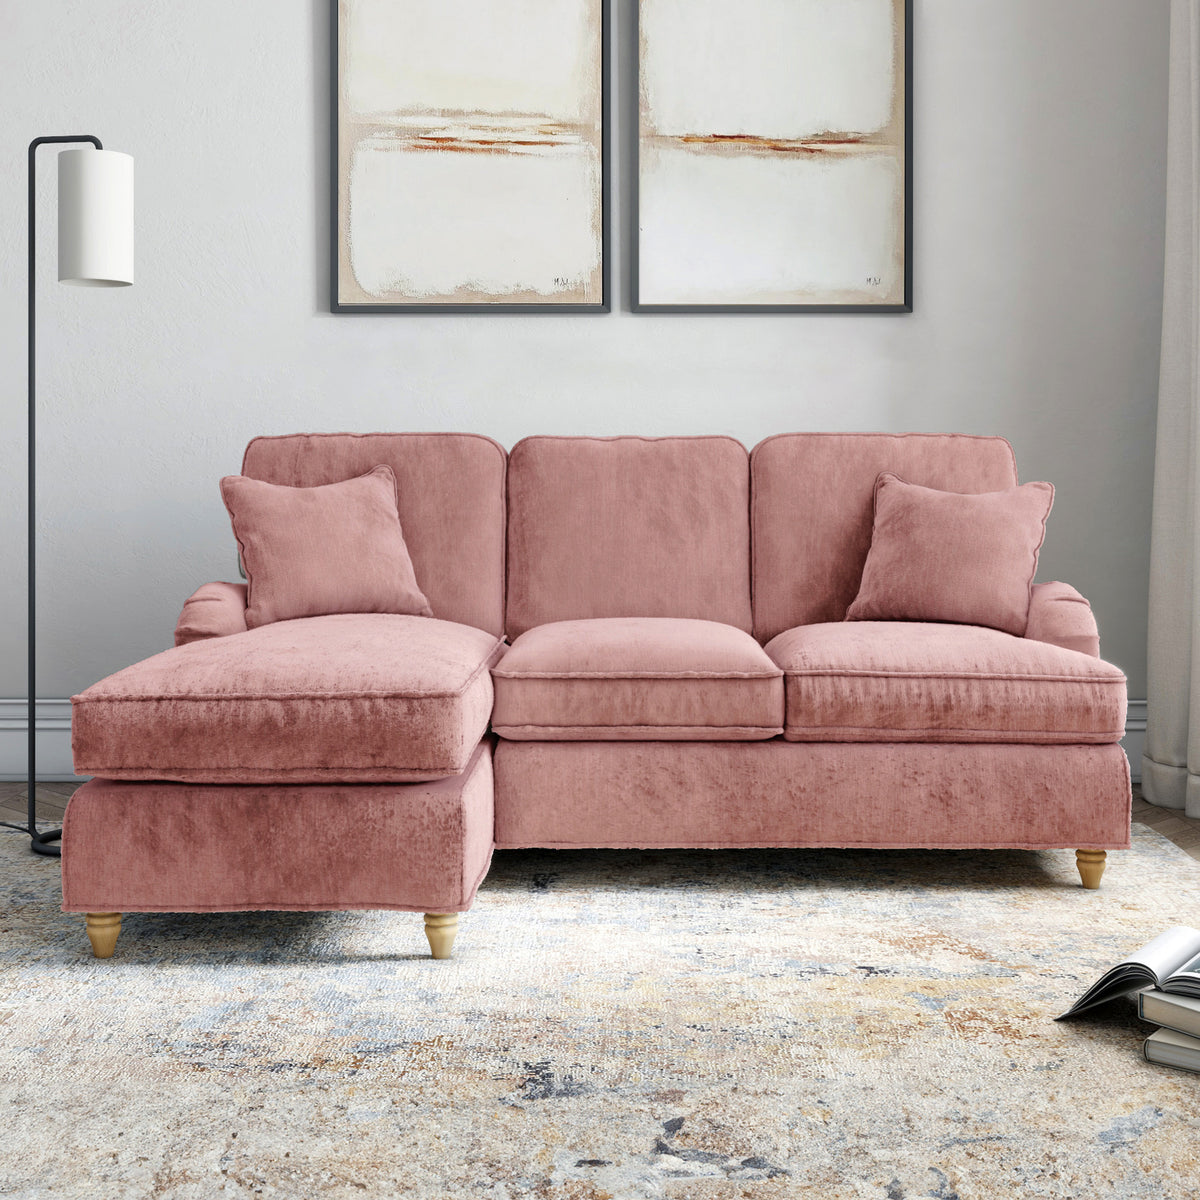 Arthur Blush Pink LH Chaise Sofa from Roseland Furniture